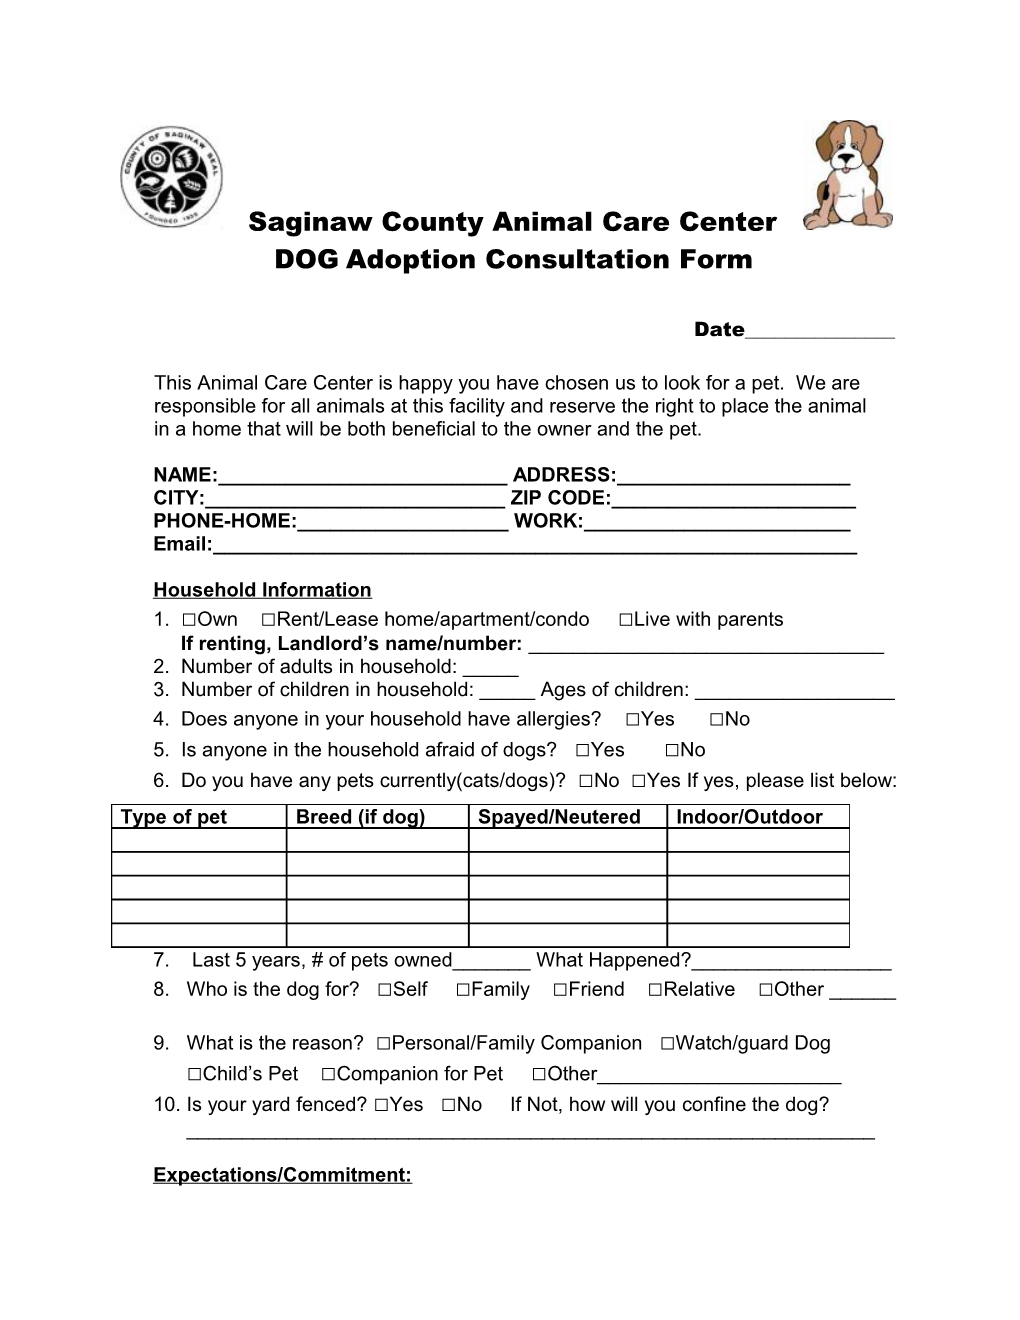 Saginaw County Animal Care Center